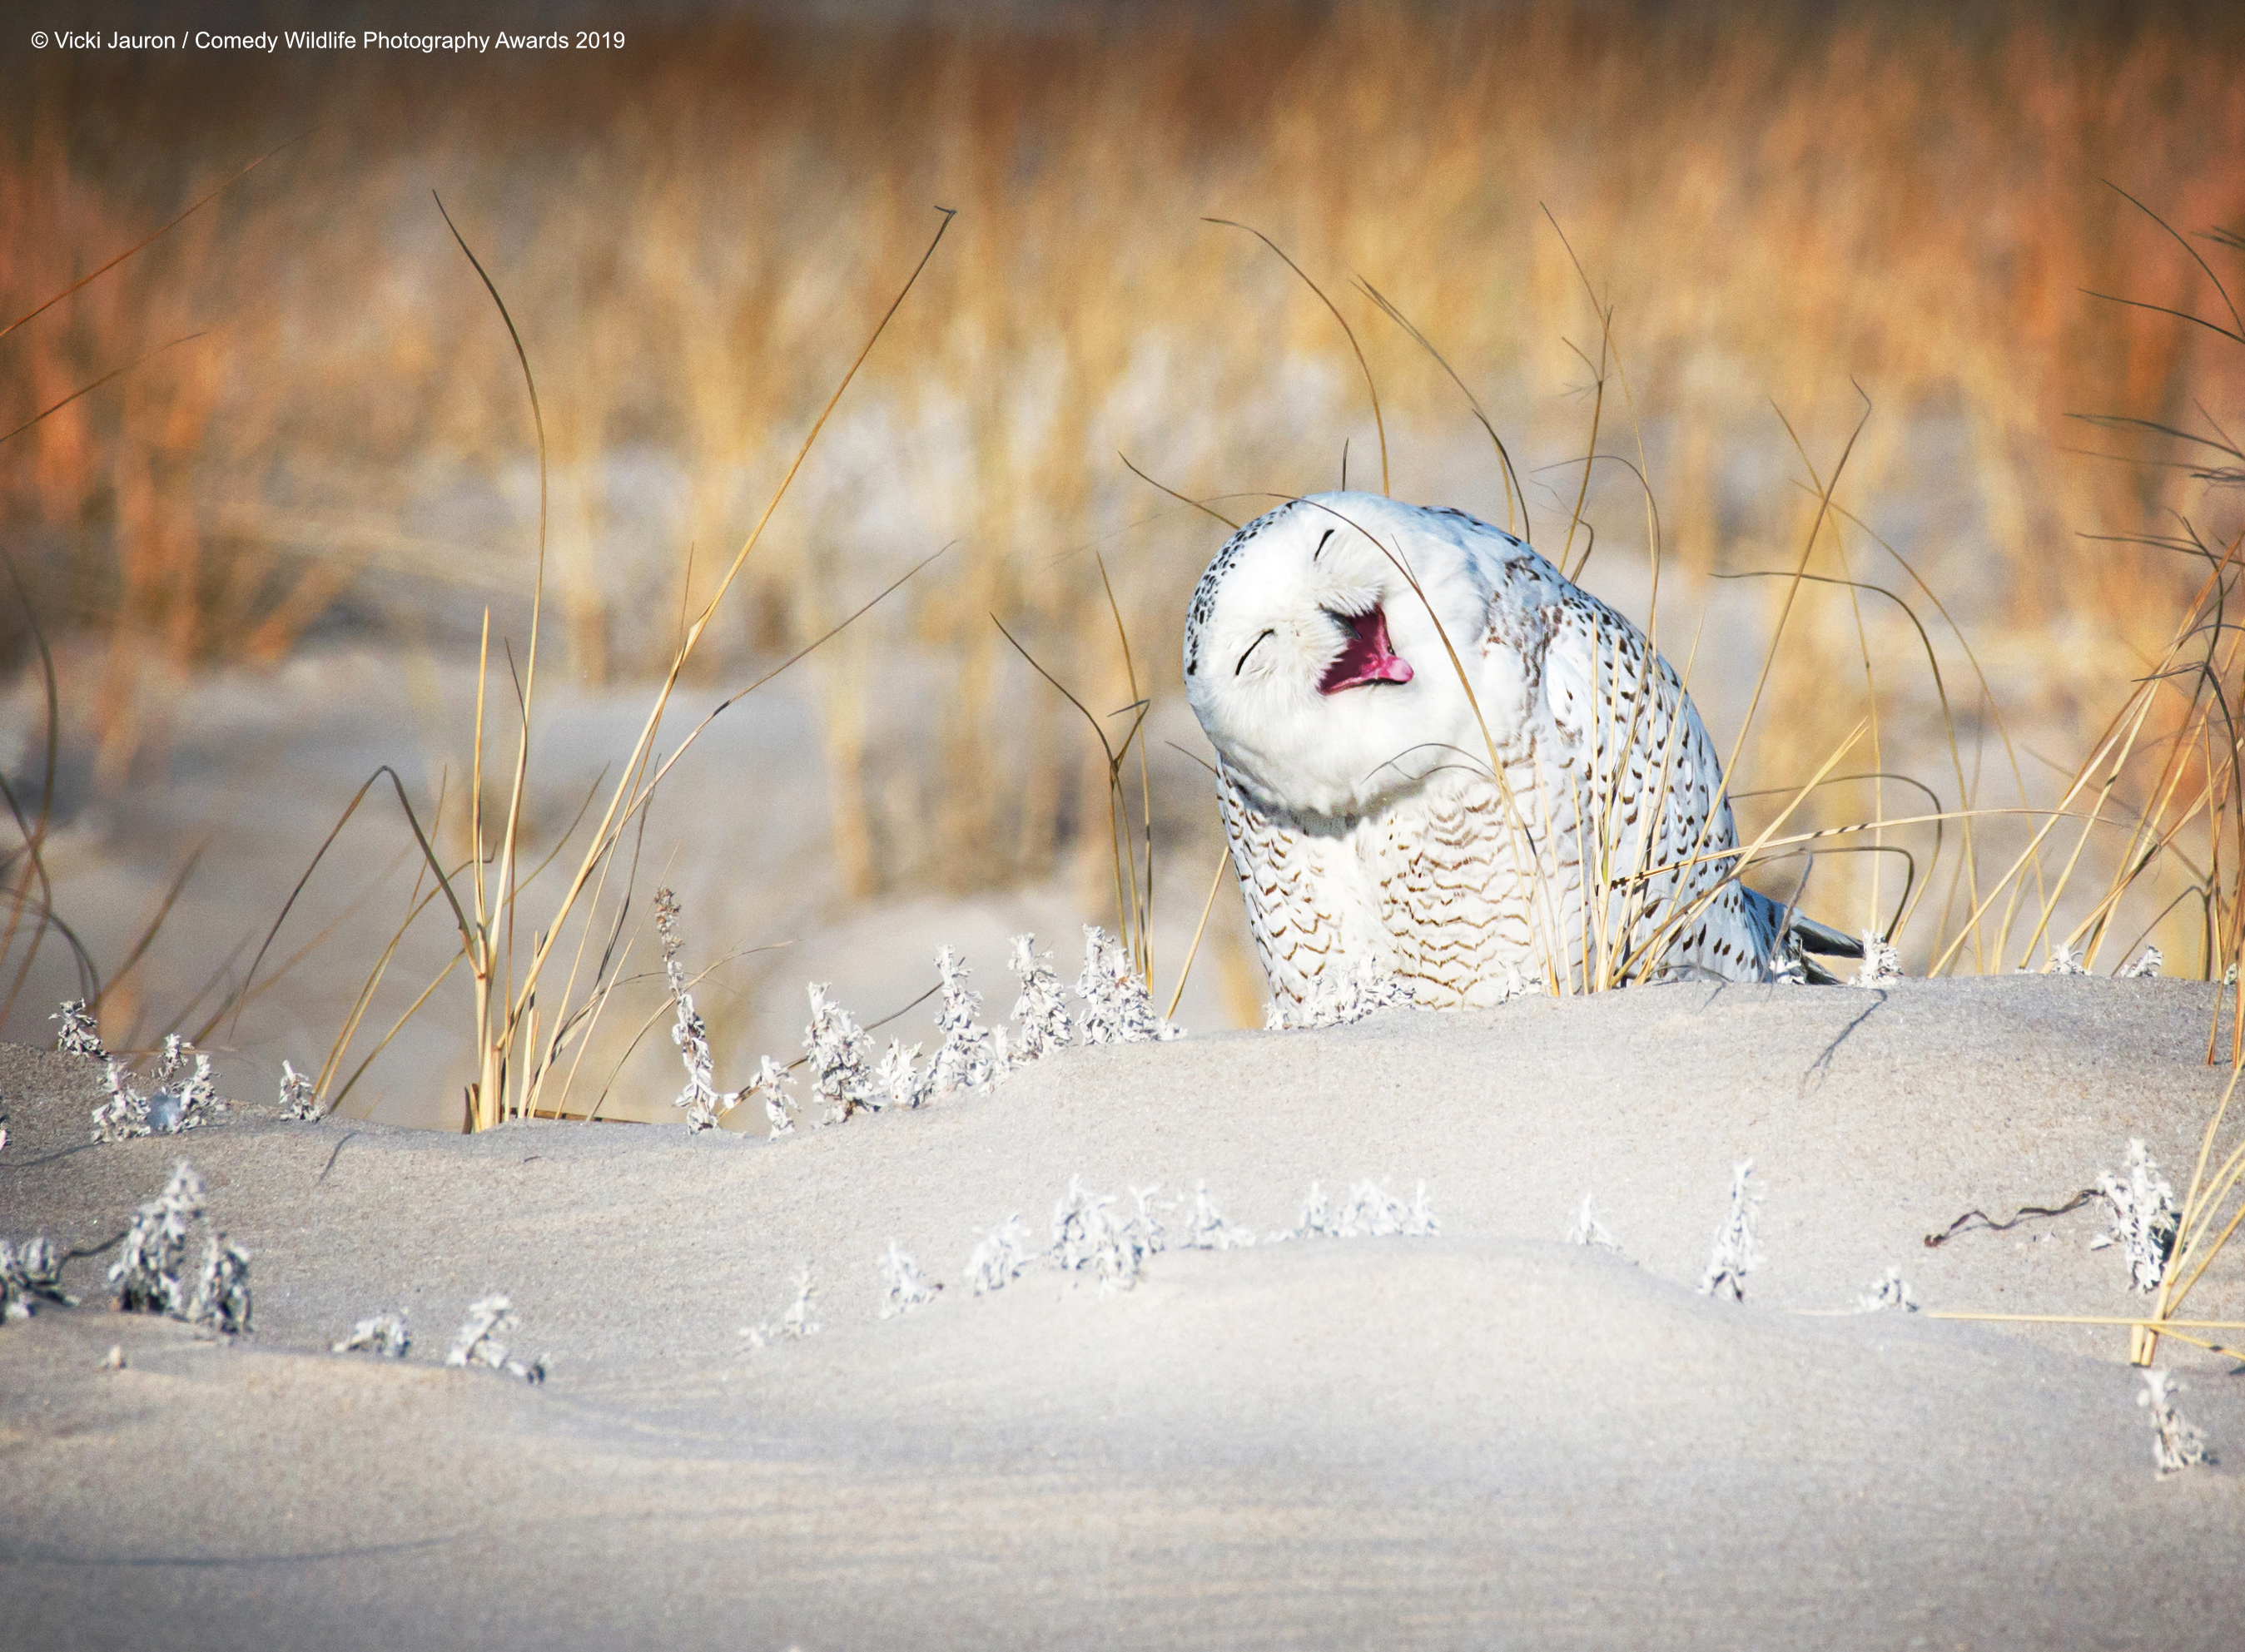 Vesela snježna sova, snima Vicki Jauron
